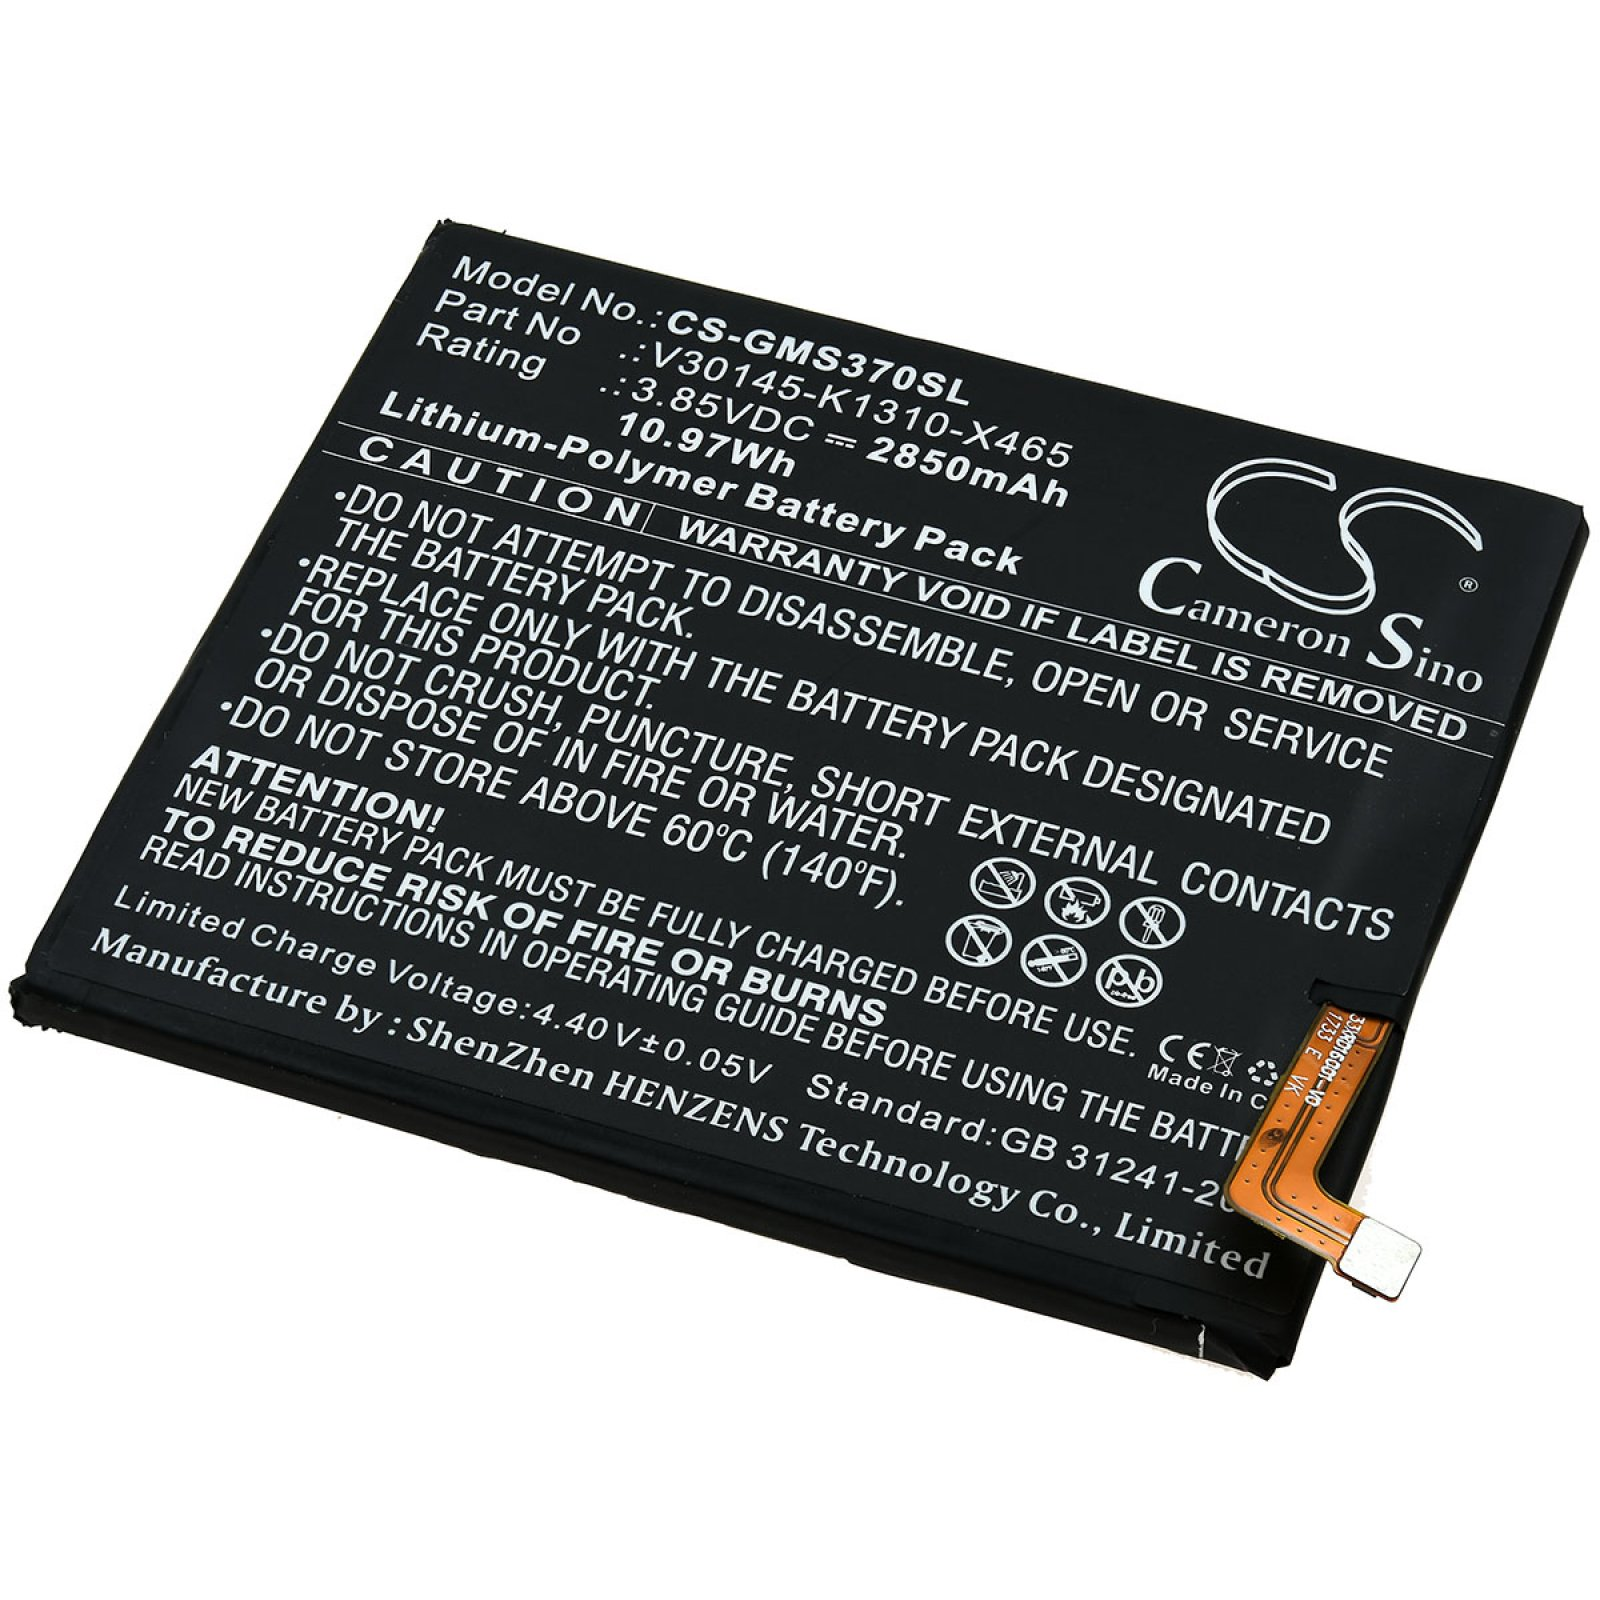 POWERY Akku für Gigaset Typ V30145-K1310-X465 Li-Polymer 2850mAh Smartphone-PDA-Akkus, 3.85 Volt